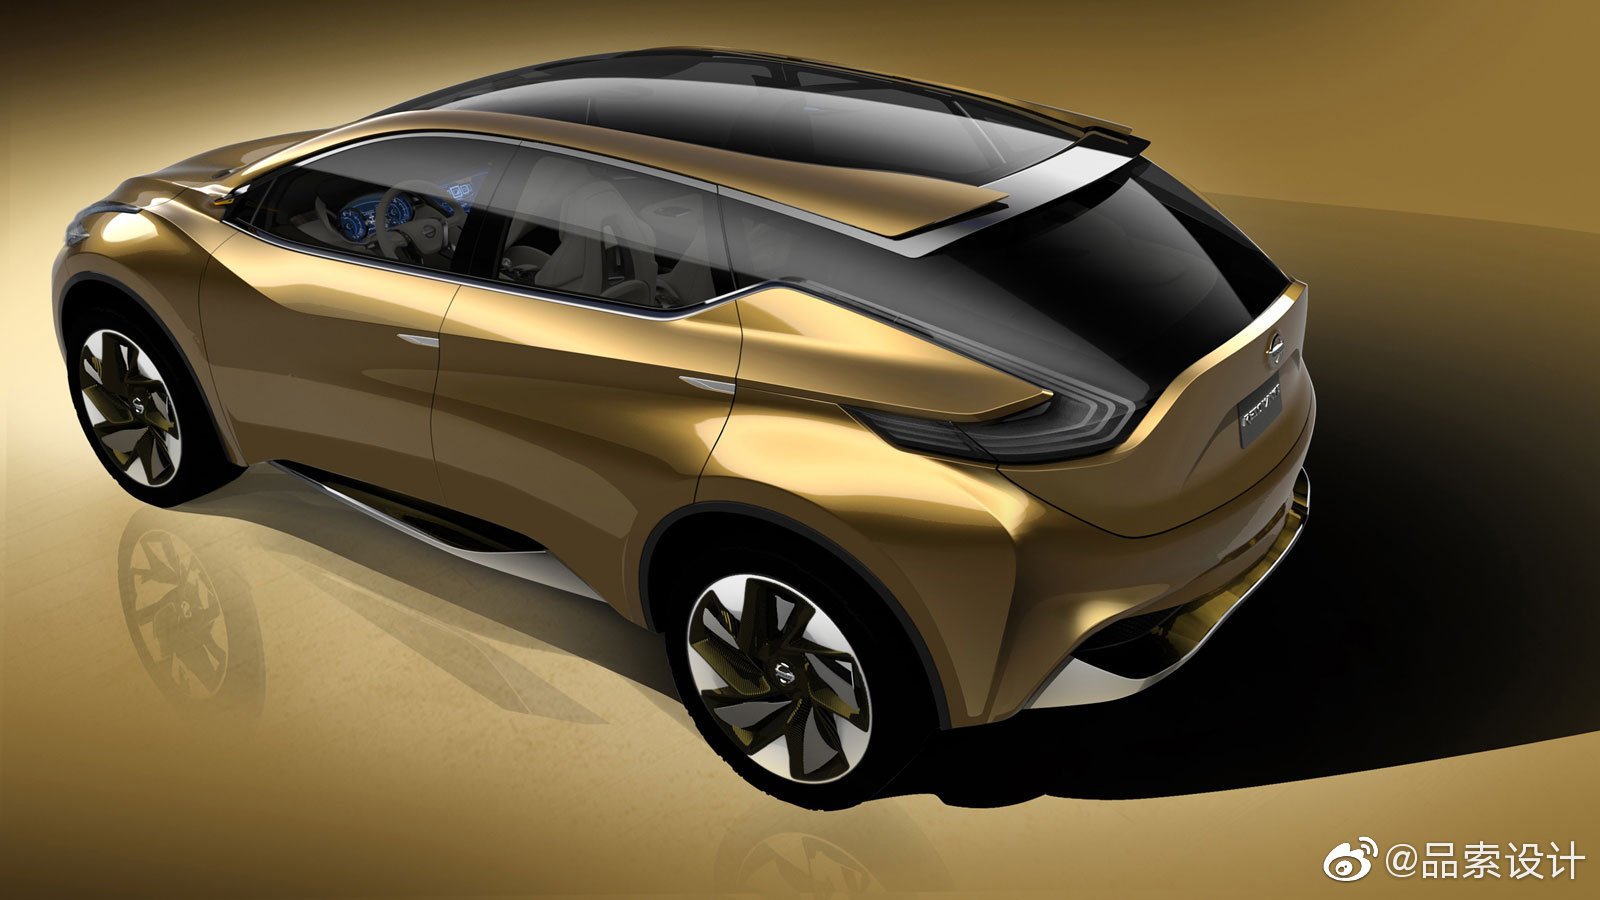 Nissan Resonance Concept 概念车设计